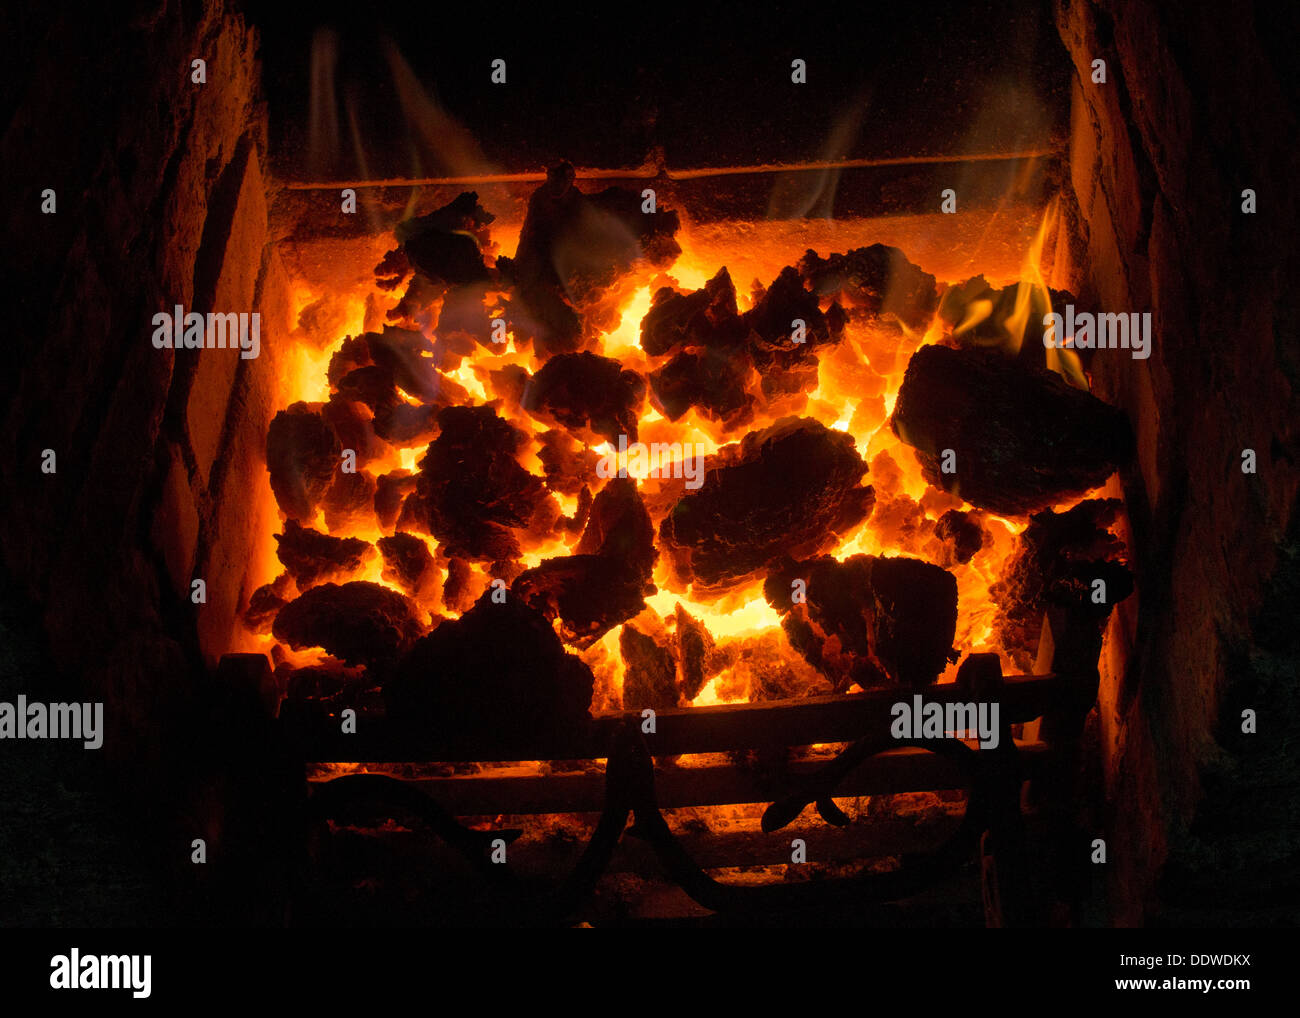 Coal fire in grate Stock Photo